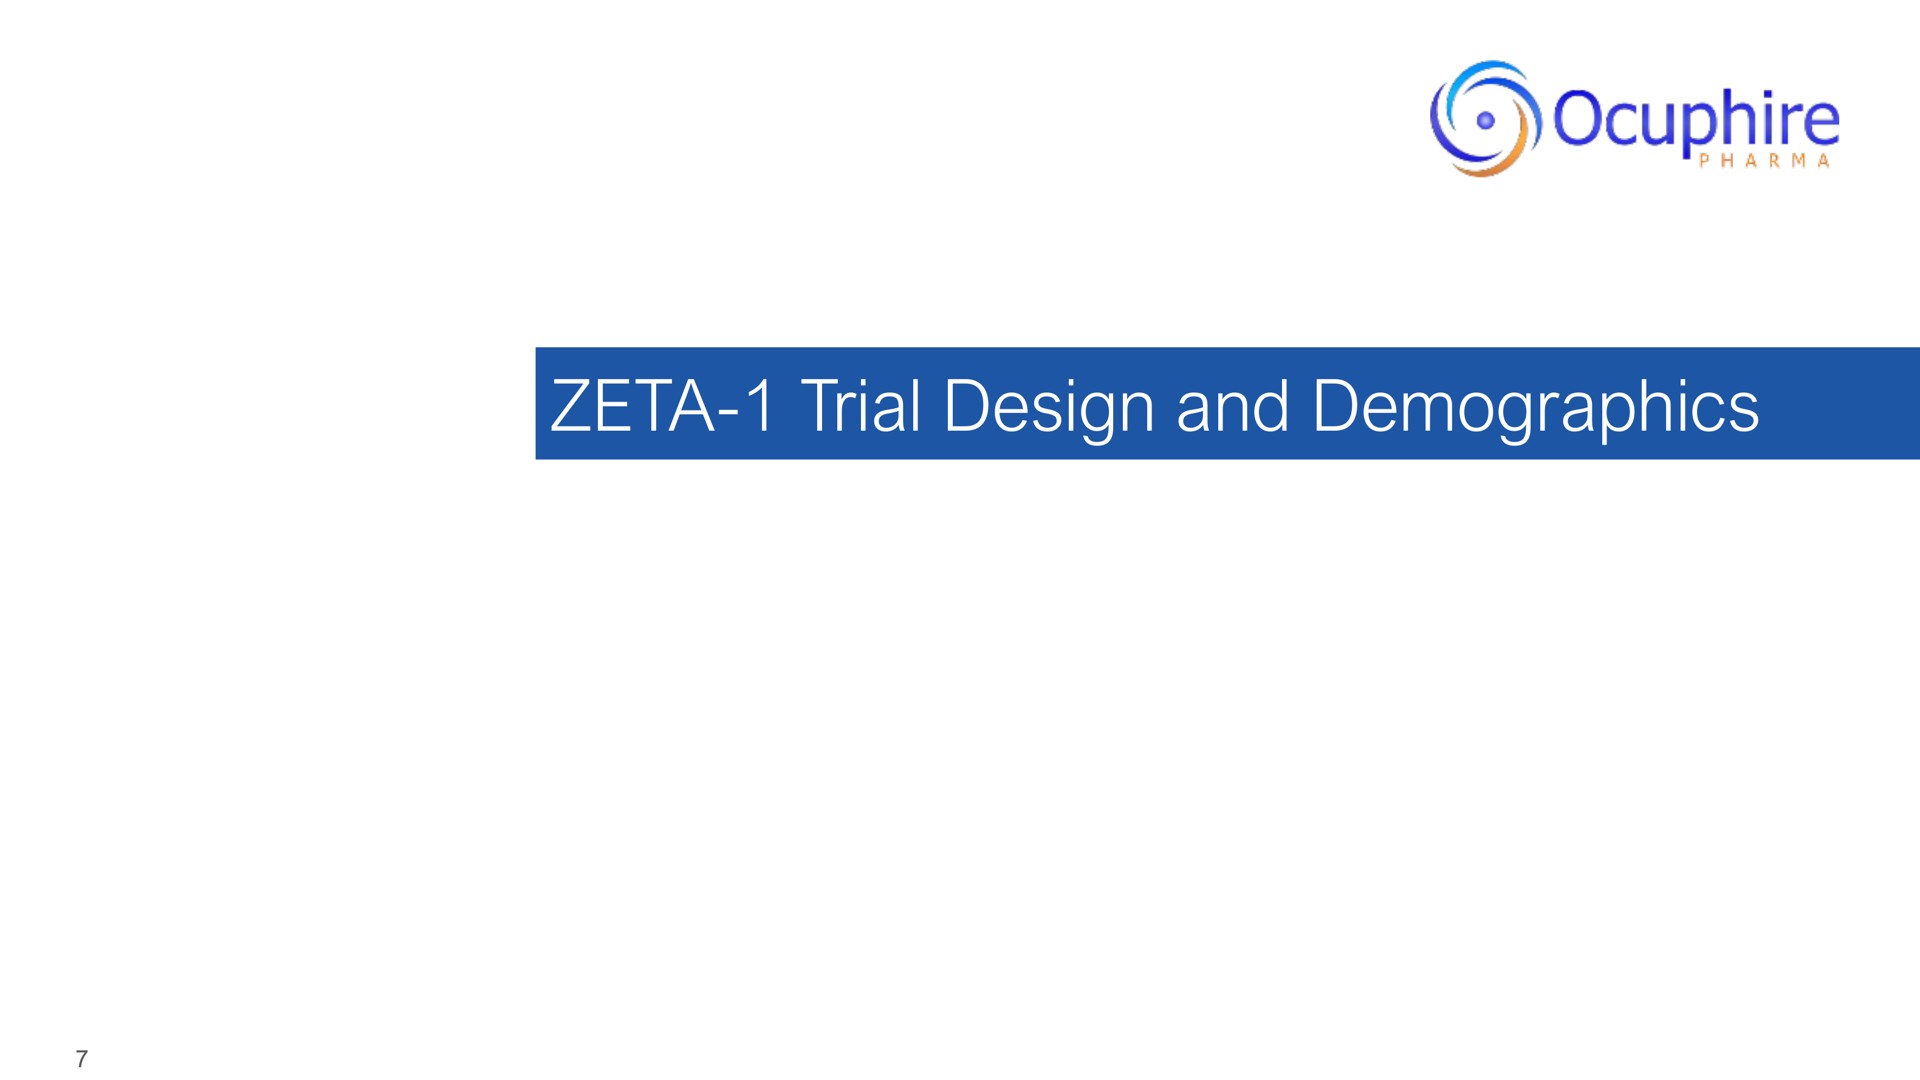 zeta trial design and demographics | Ocuphire Pharma